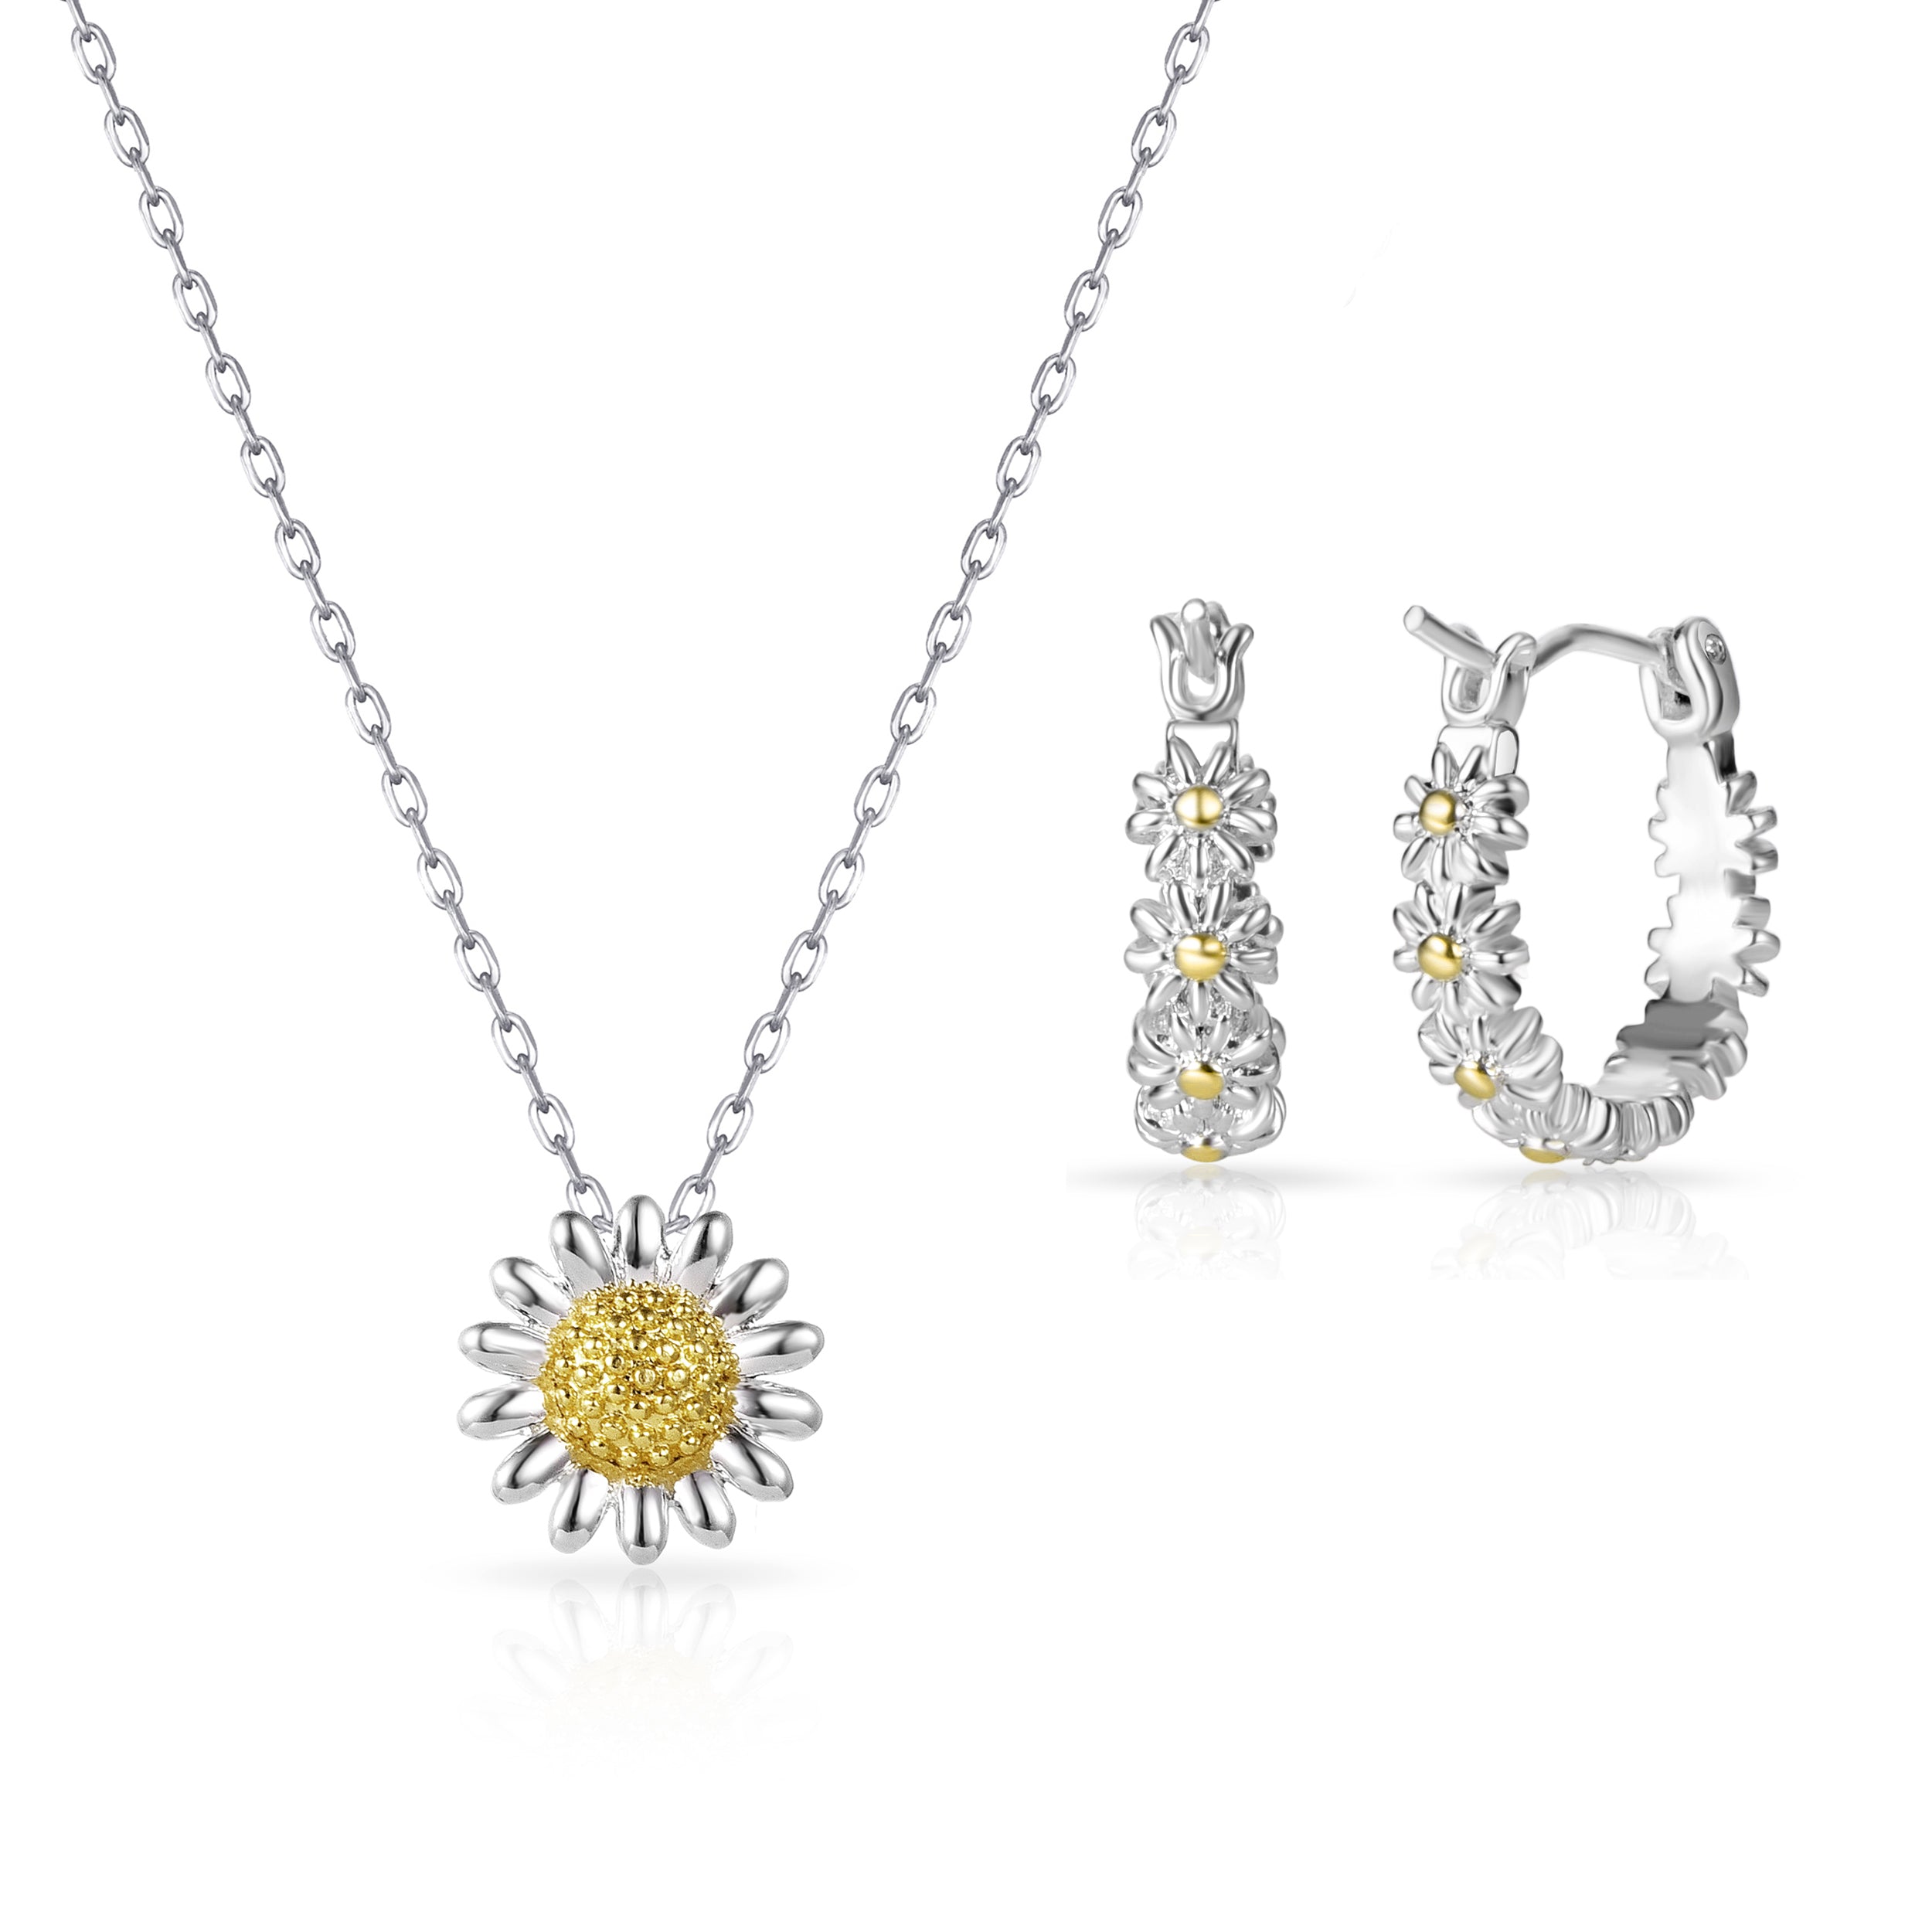 Daisy Necklace and Hoop Earrings Set by Philip Jones Jewellery